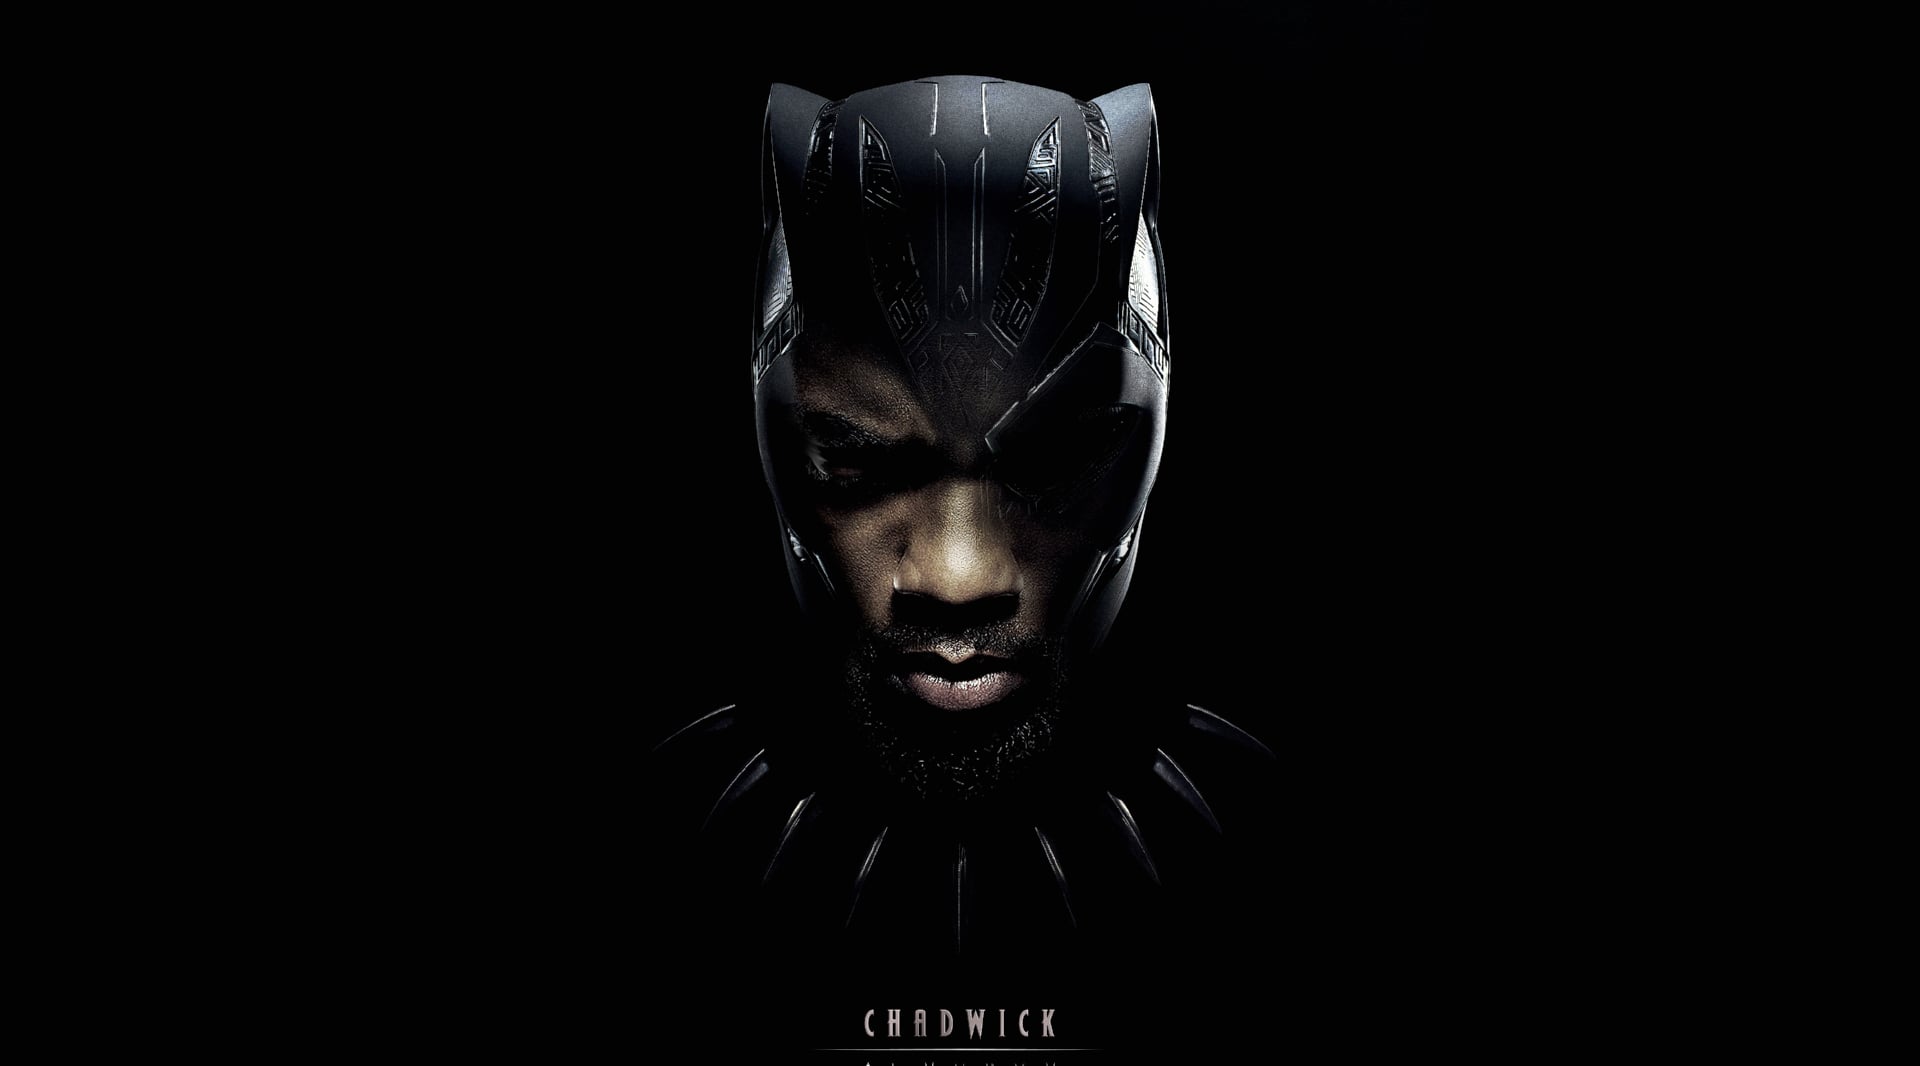 Chadwick Boseman as Black Panther at 1280 x 960 size wallpapers HD quality